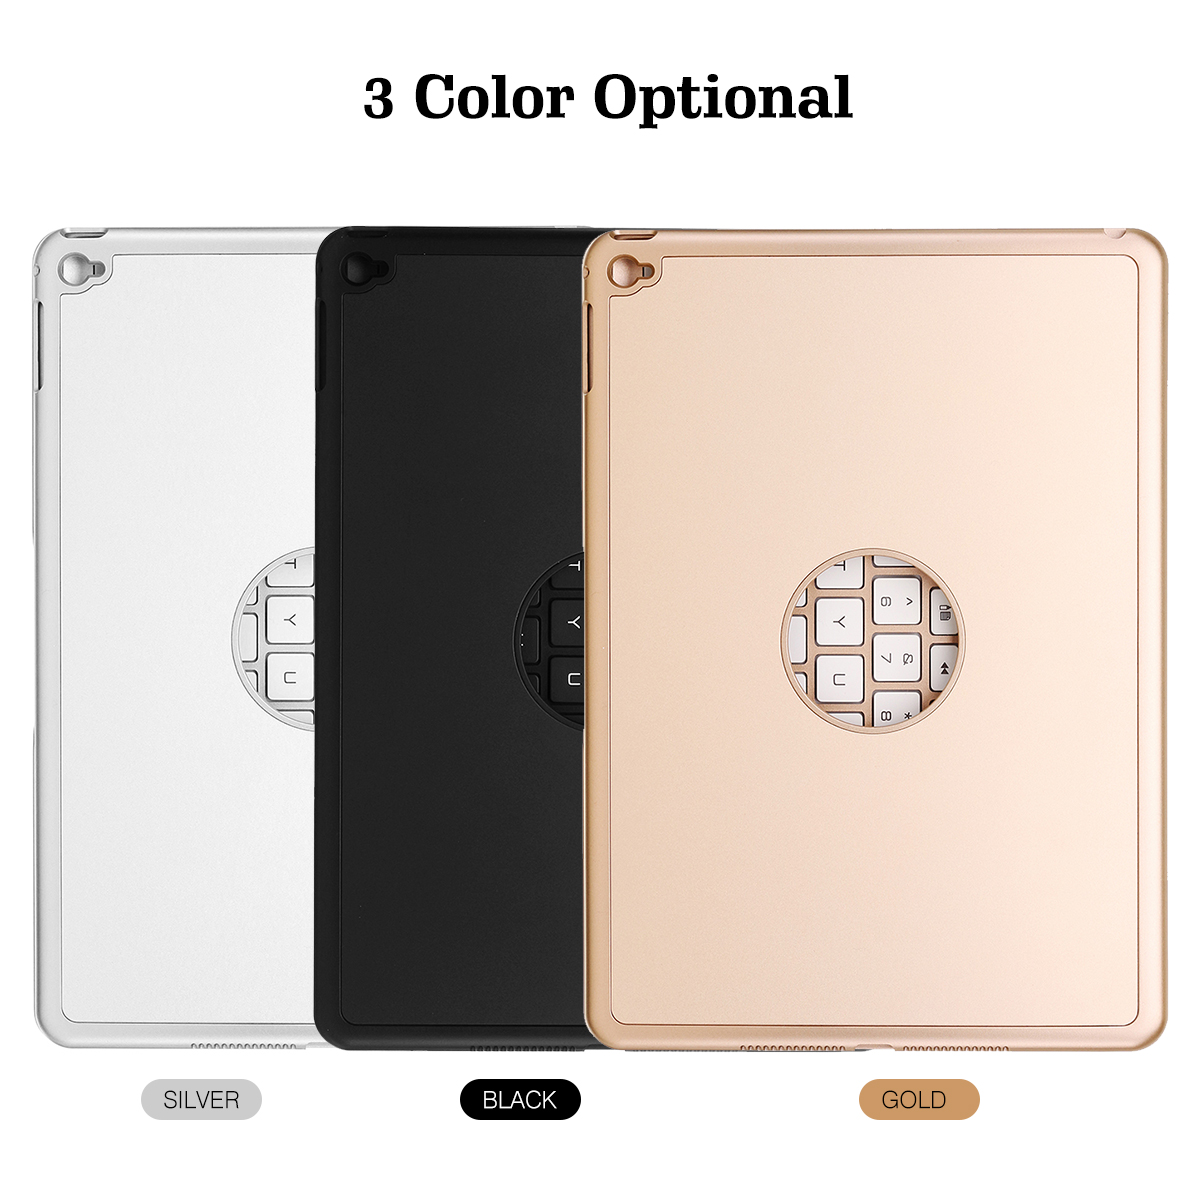 7-Colors-Backlit-Aluminum-Alloy-Wireless-bluetooth-Keyboard-Case-For-iPad-AiriPad-Air-2-1411377-8